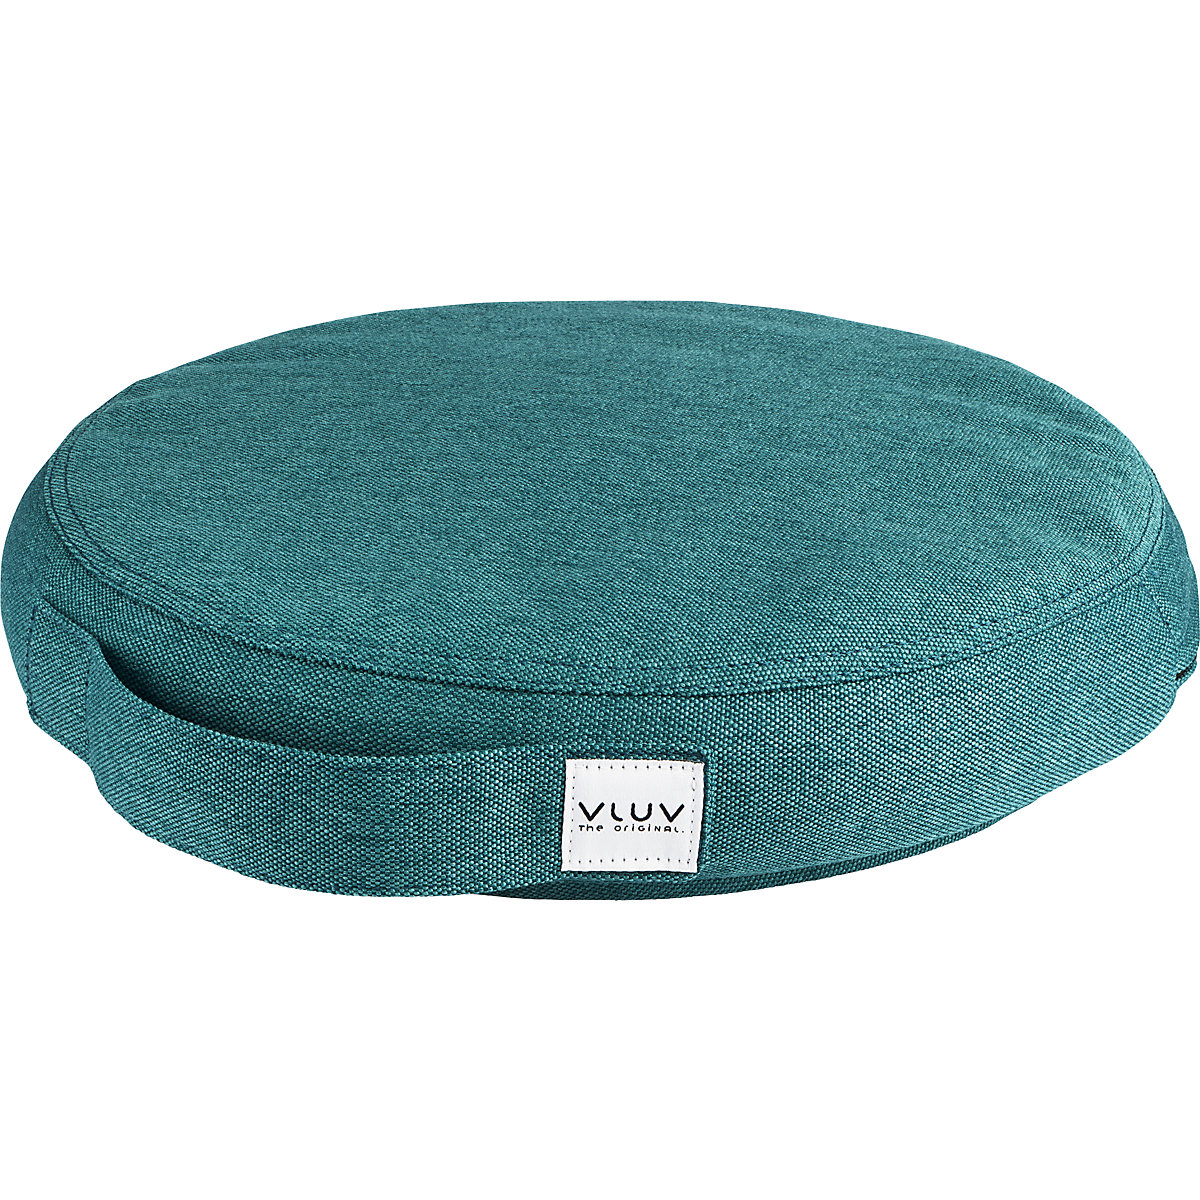 PIL&PED LEIV balance cushion – VLUV, with fabric cover, Ø 360 mm, petrol